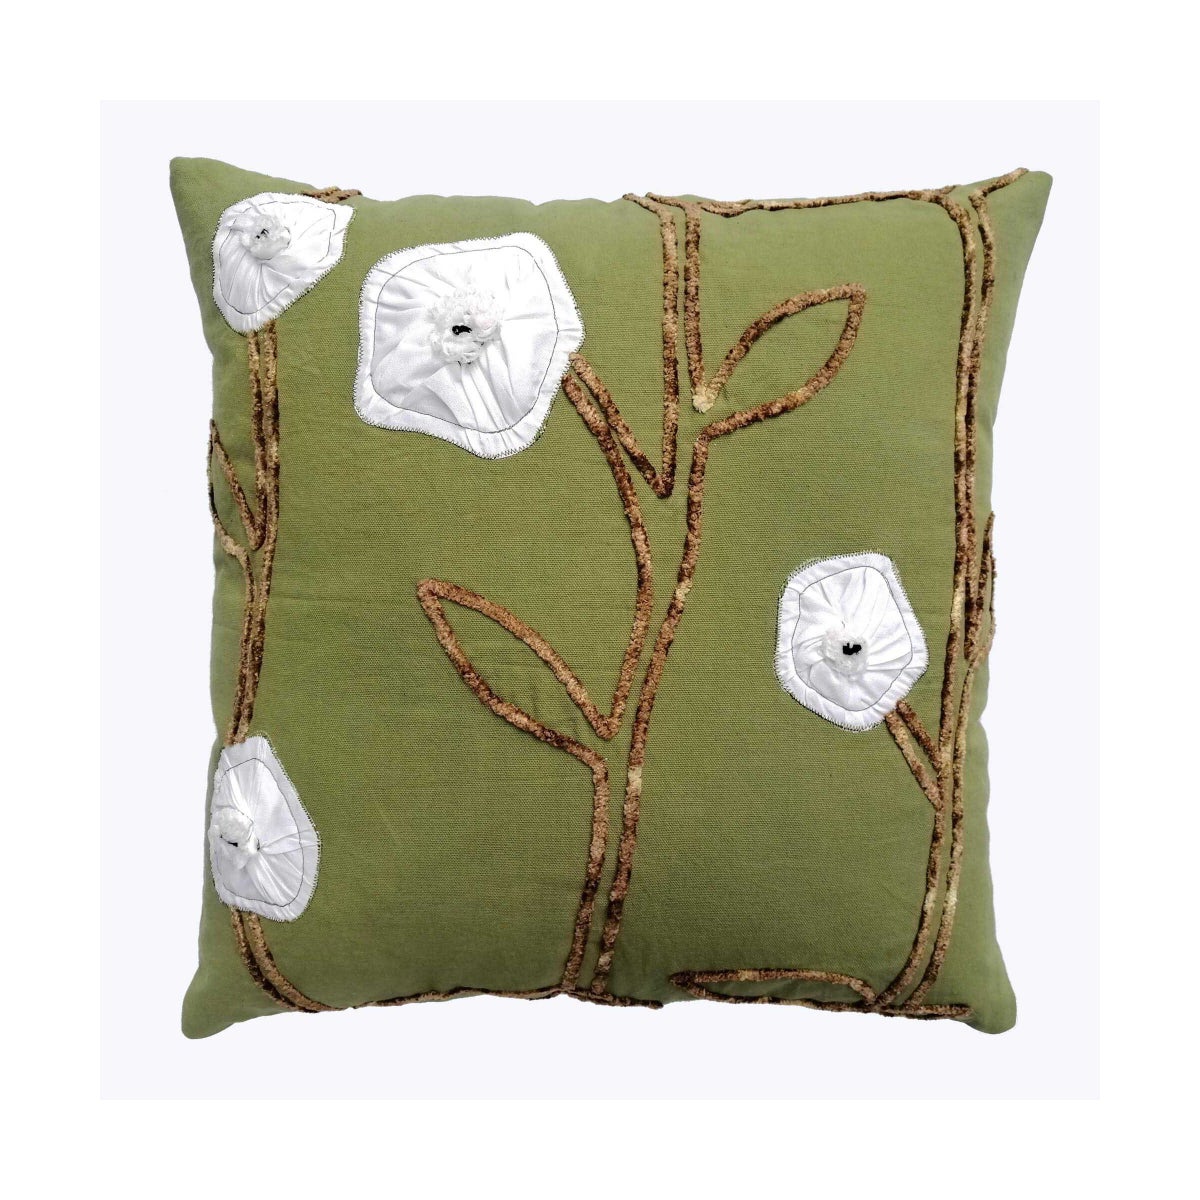 Cotton Square Pillow with Floral Design, 18 X 18